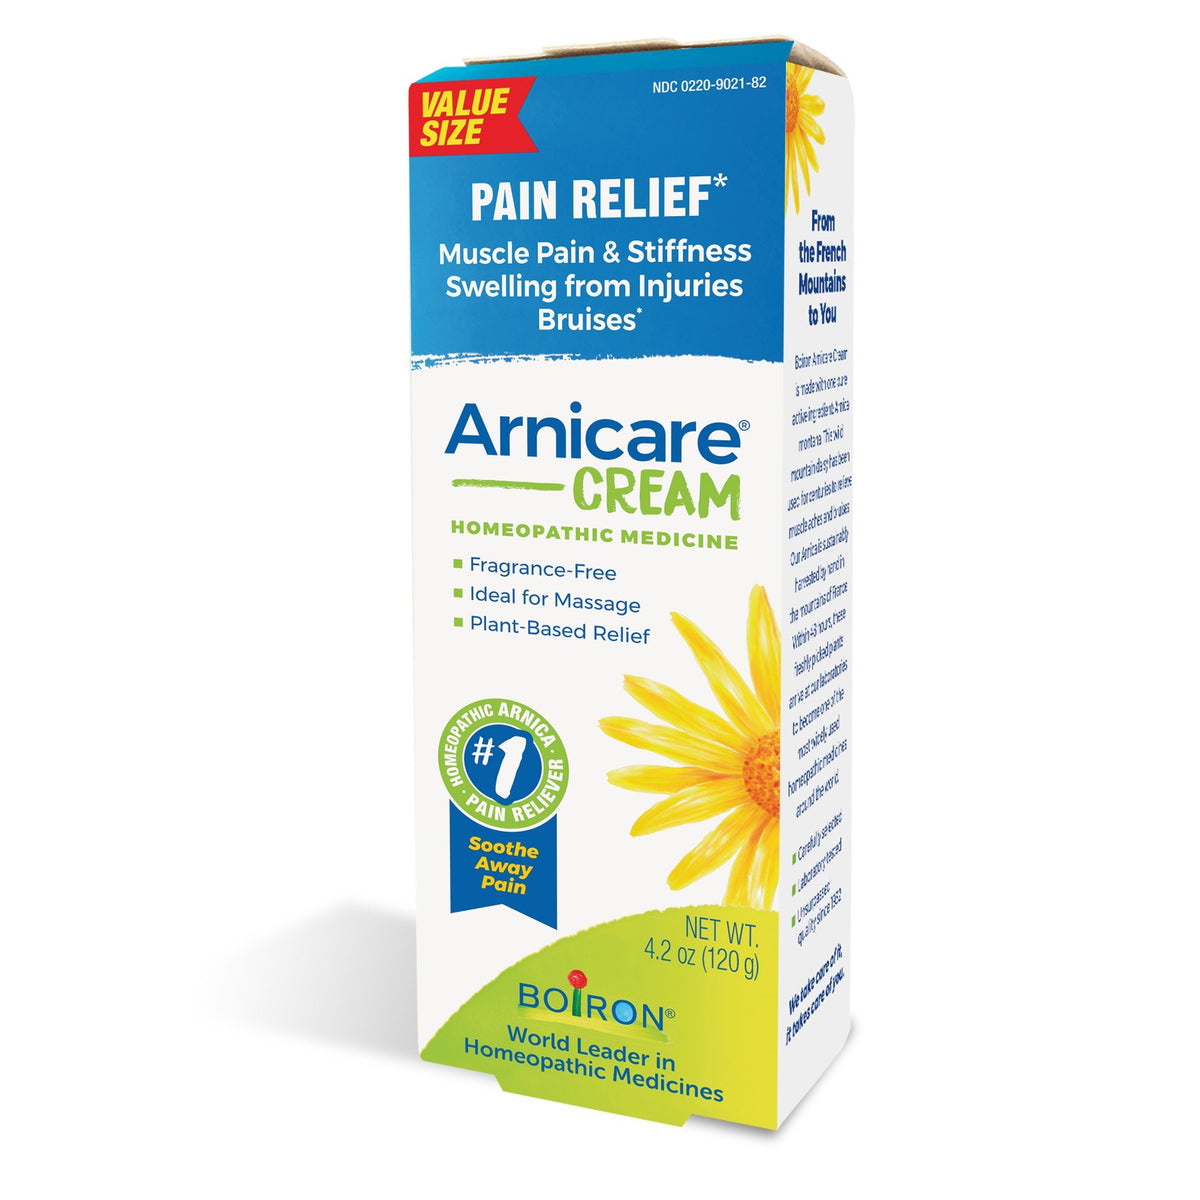 Boiron Arnicare Cream Homeopathic Medicine For Pain Relief 4.2 oz Cream